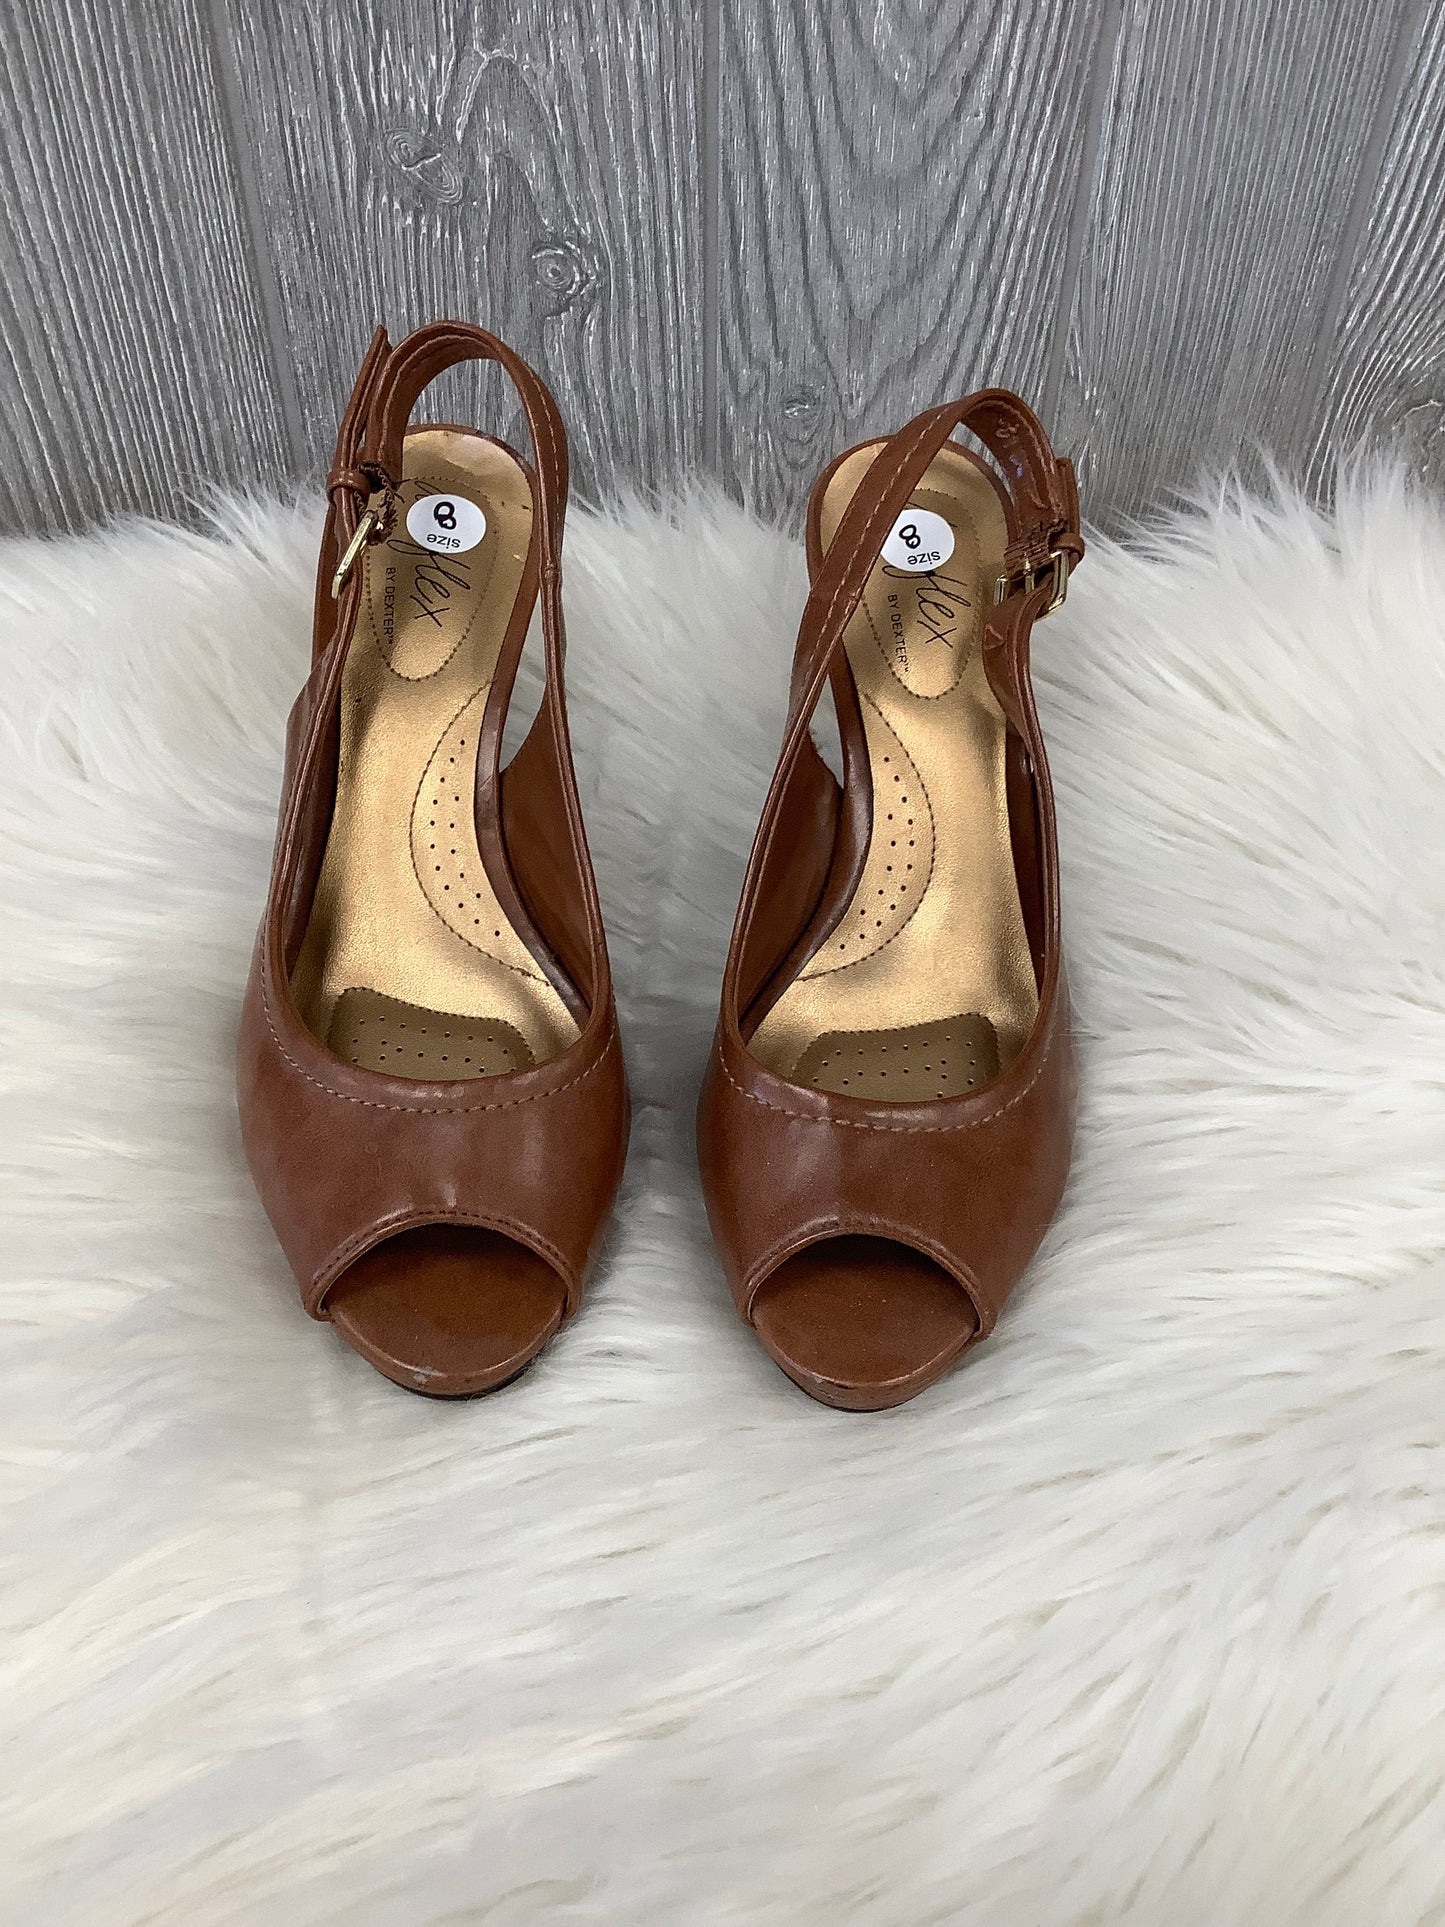 Brown Shoes Heels Kitten Dexter, Size 8